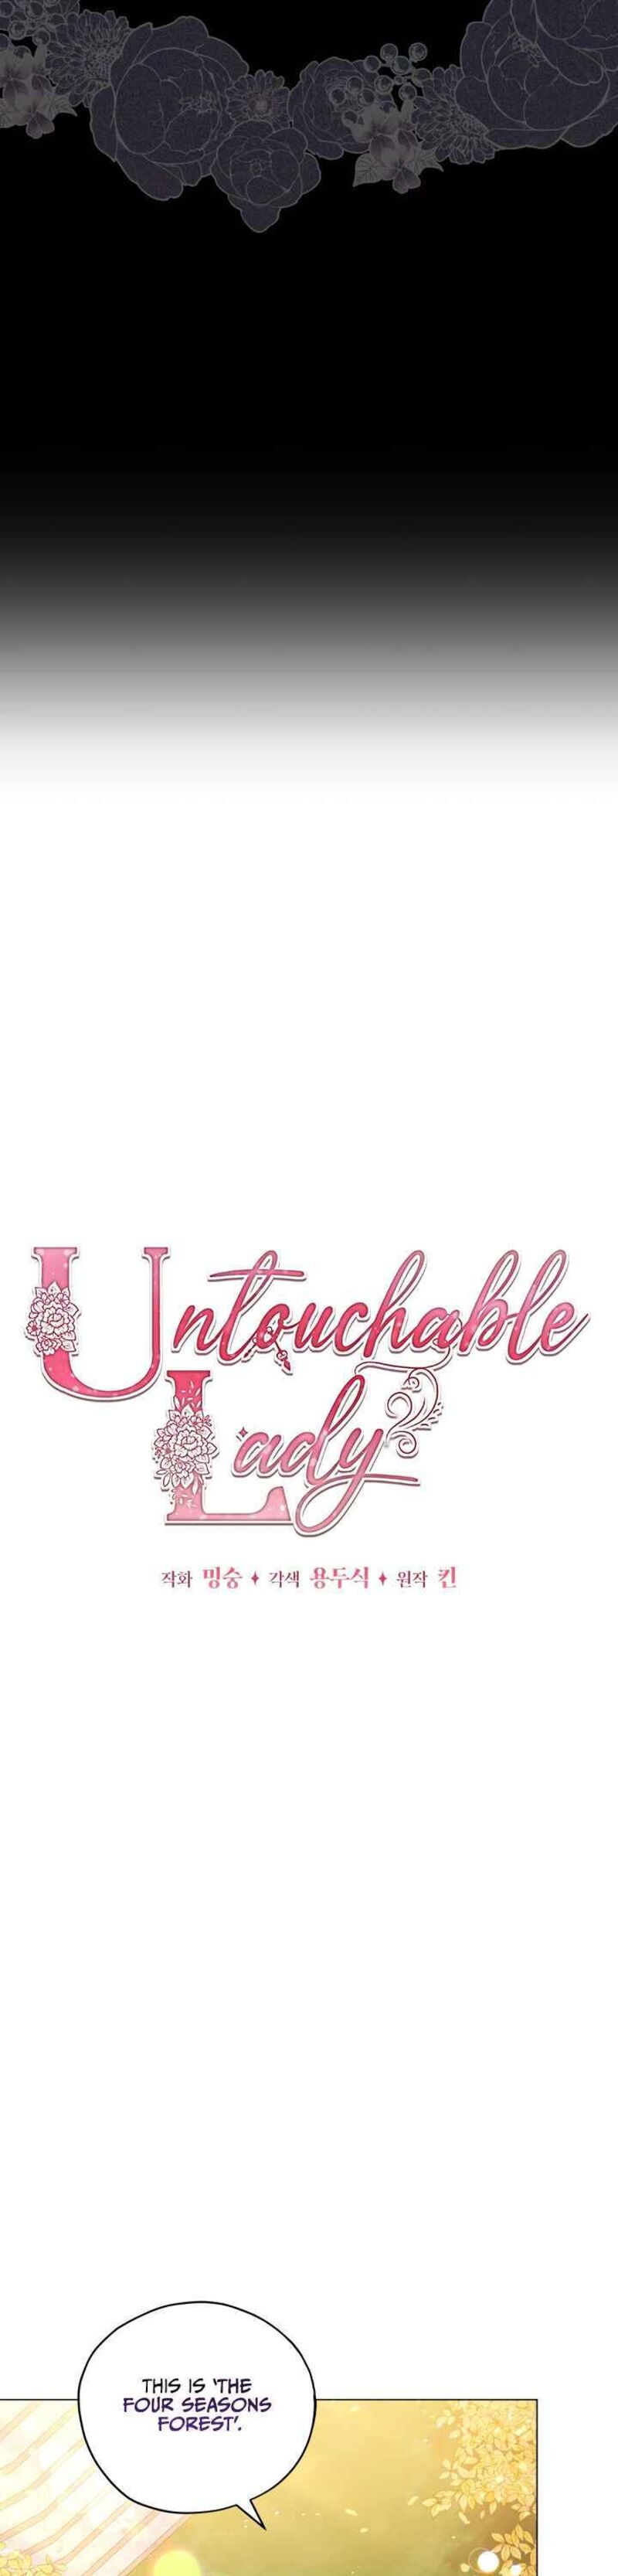 untouchable_lady_23_6